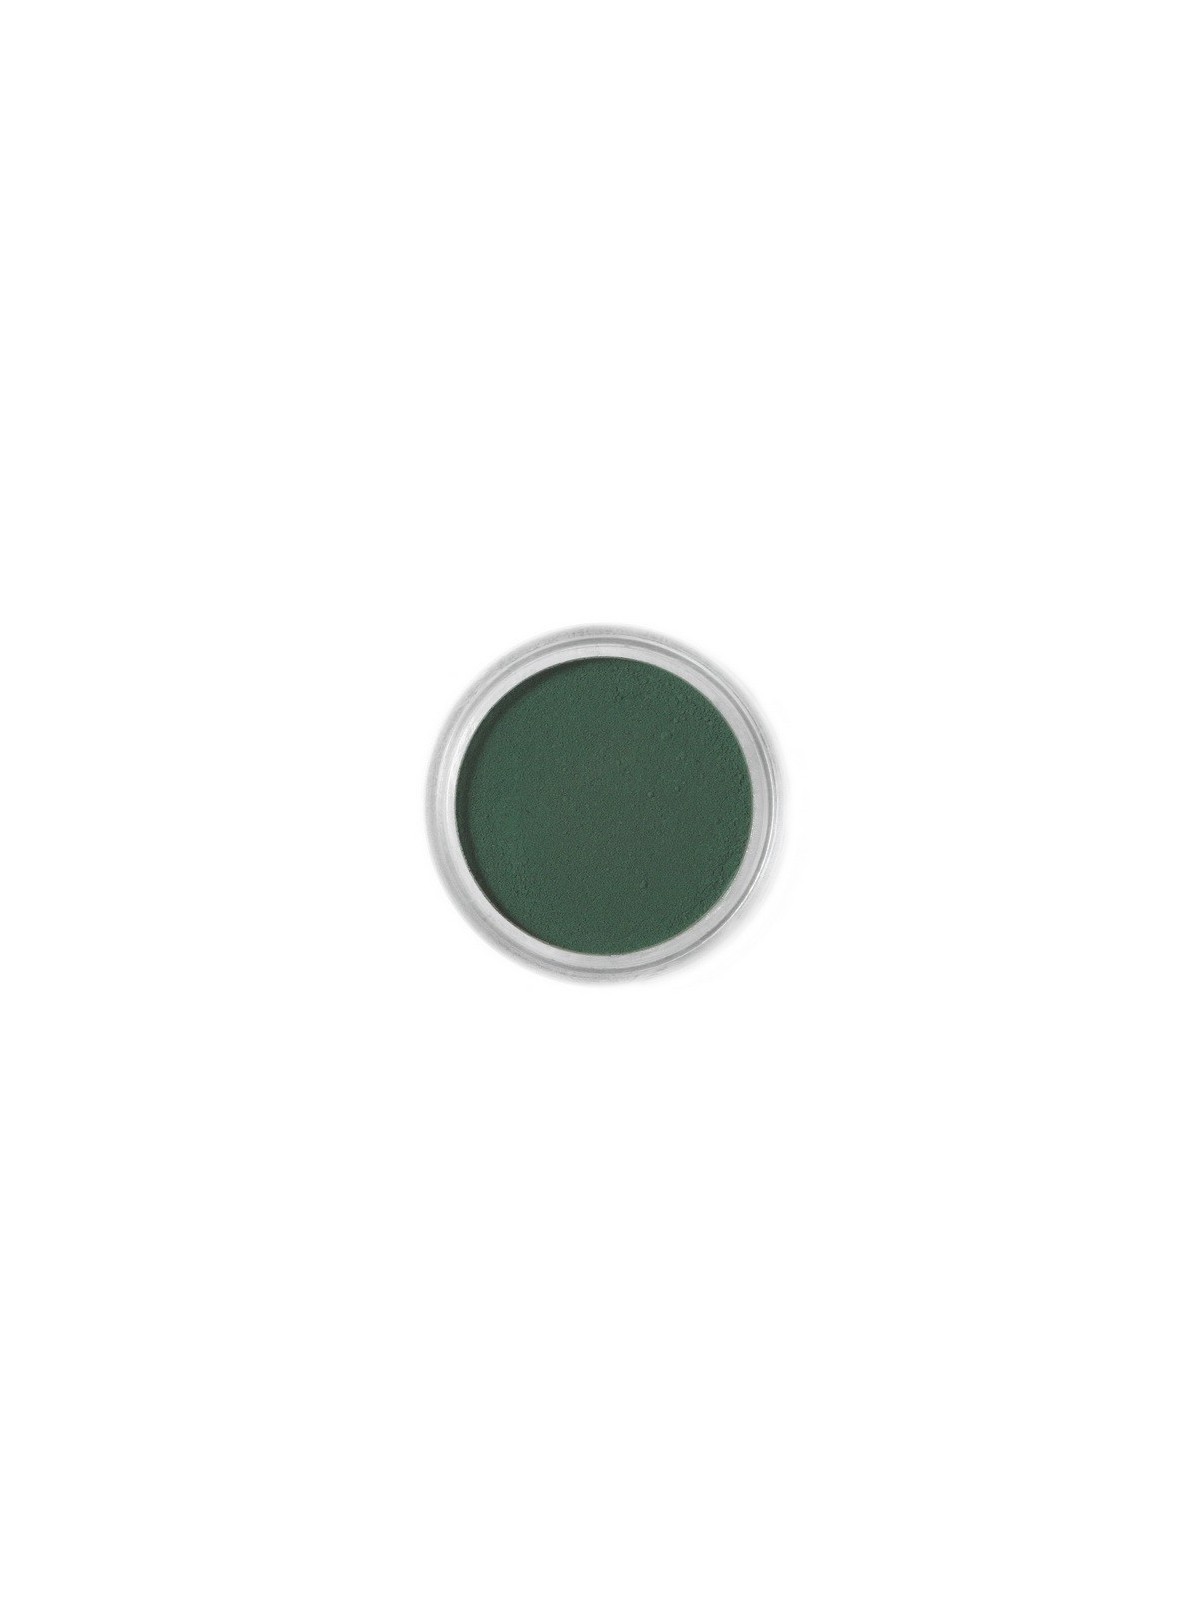 Edible dust Fractal color - Dark Green, Sötét zöld (1.5 g)